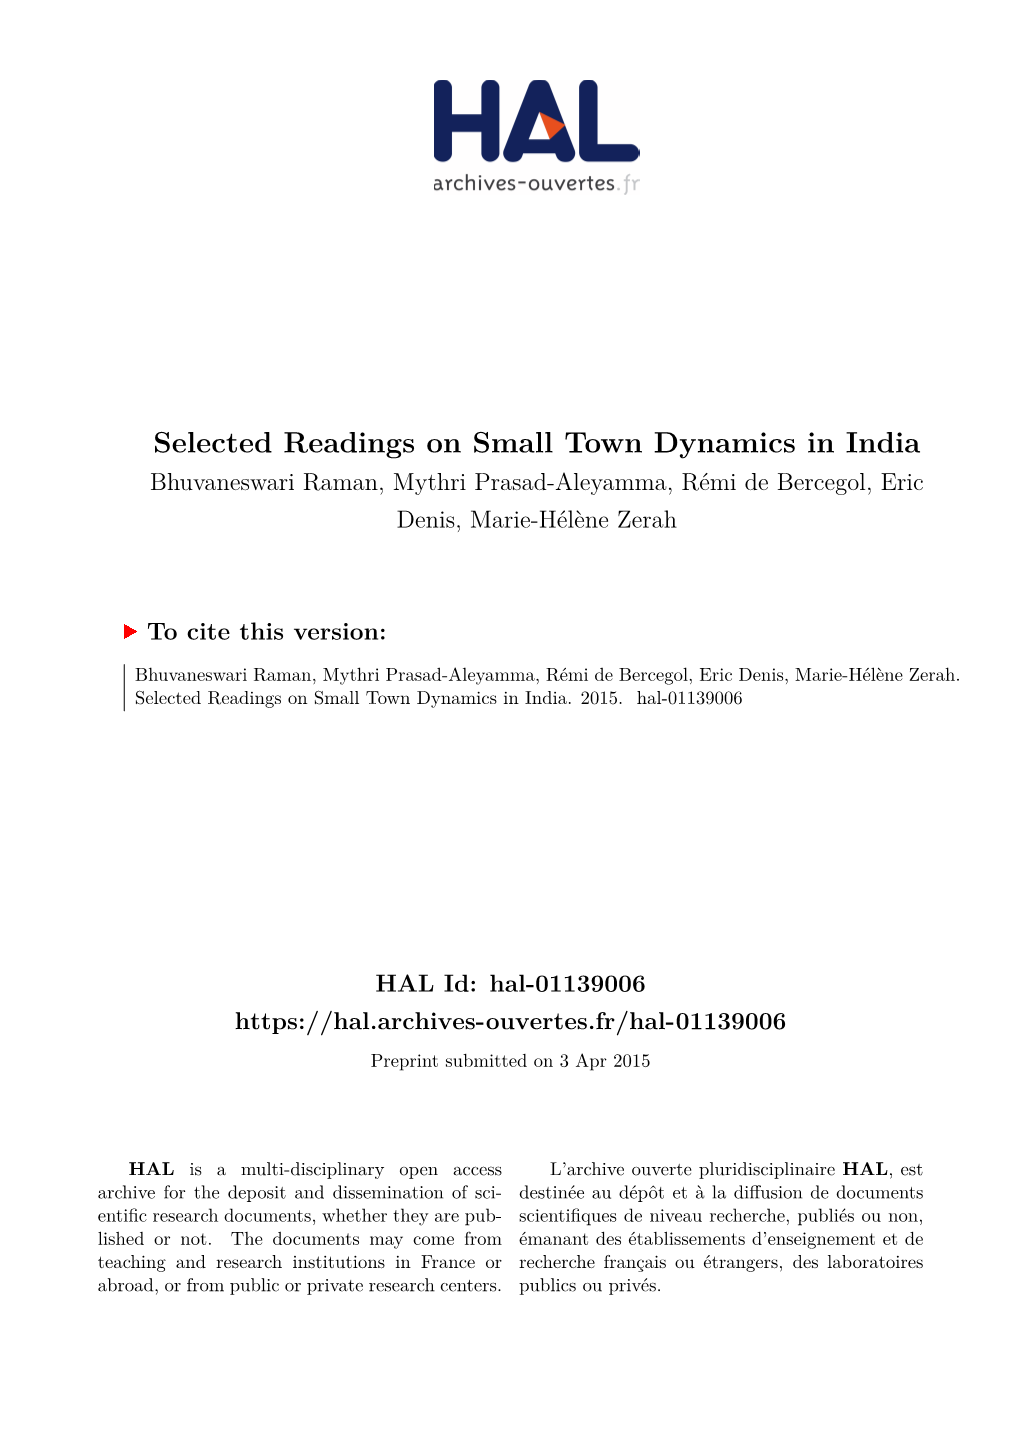 Selected Readings on Small Town Dynamics in India Bhuvaneswari Raman, Mythri Prasad-Aleyamma, Rémi De Bercegol, Eric Denis, Marie-Hélène Zerah